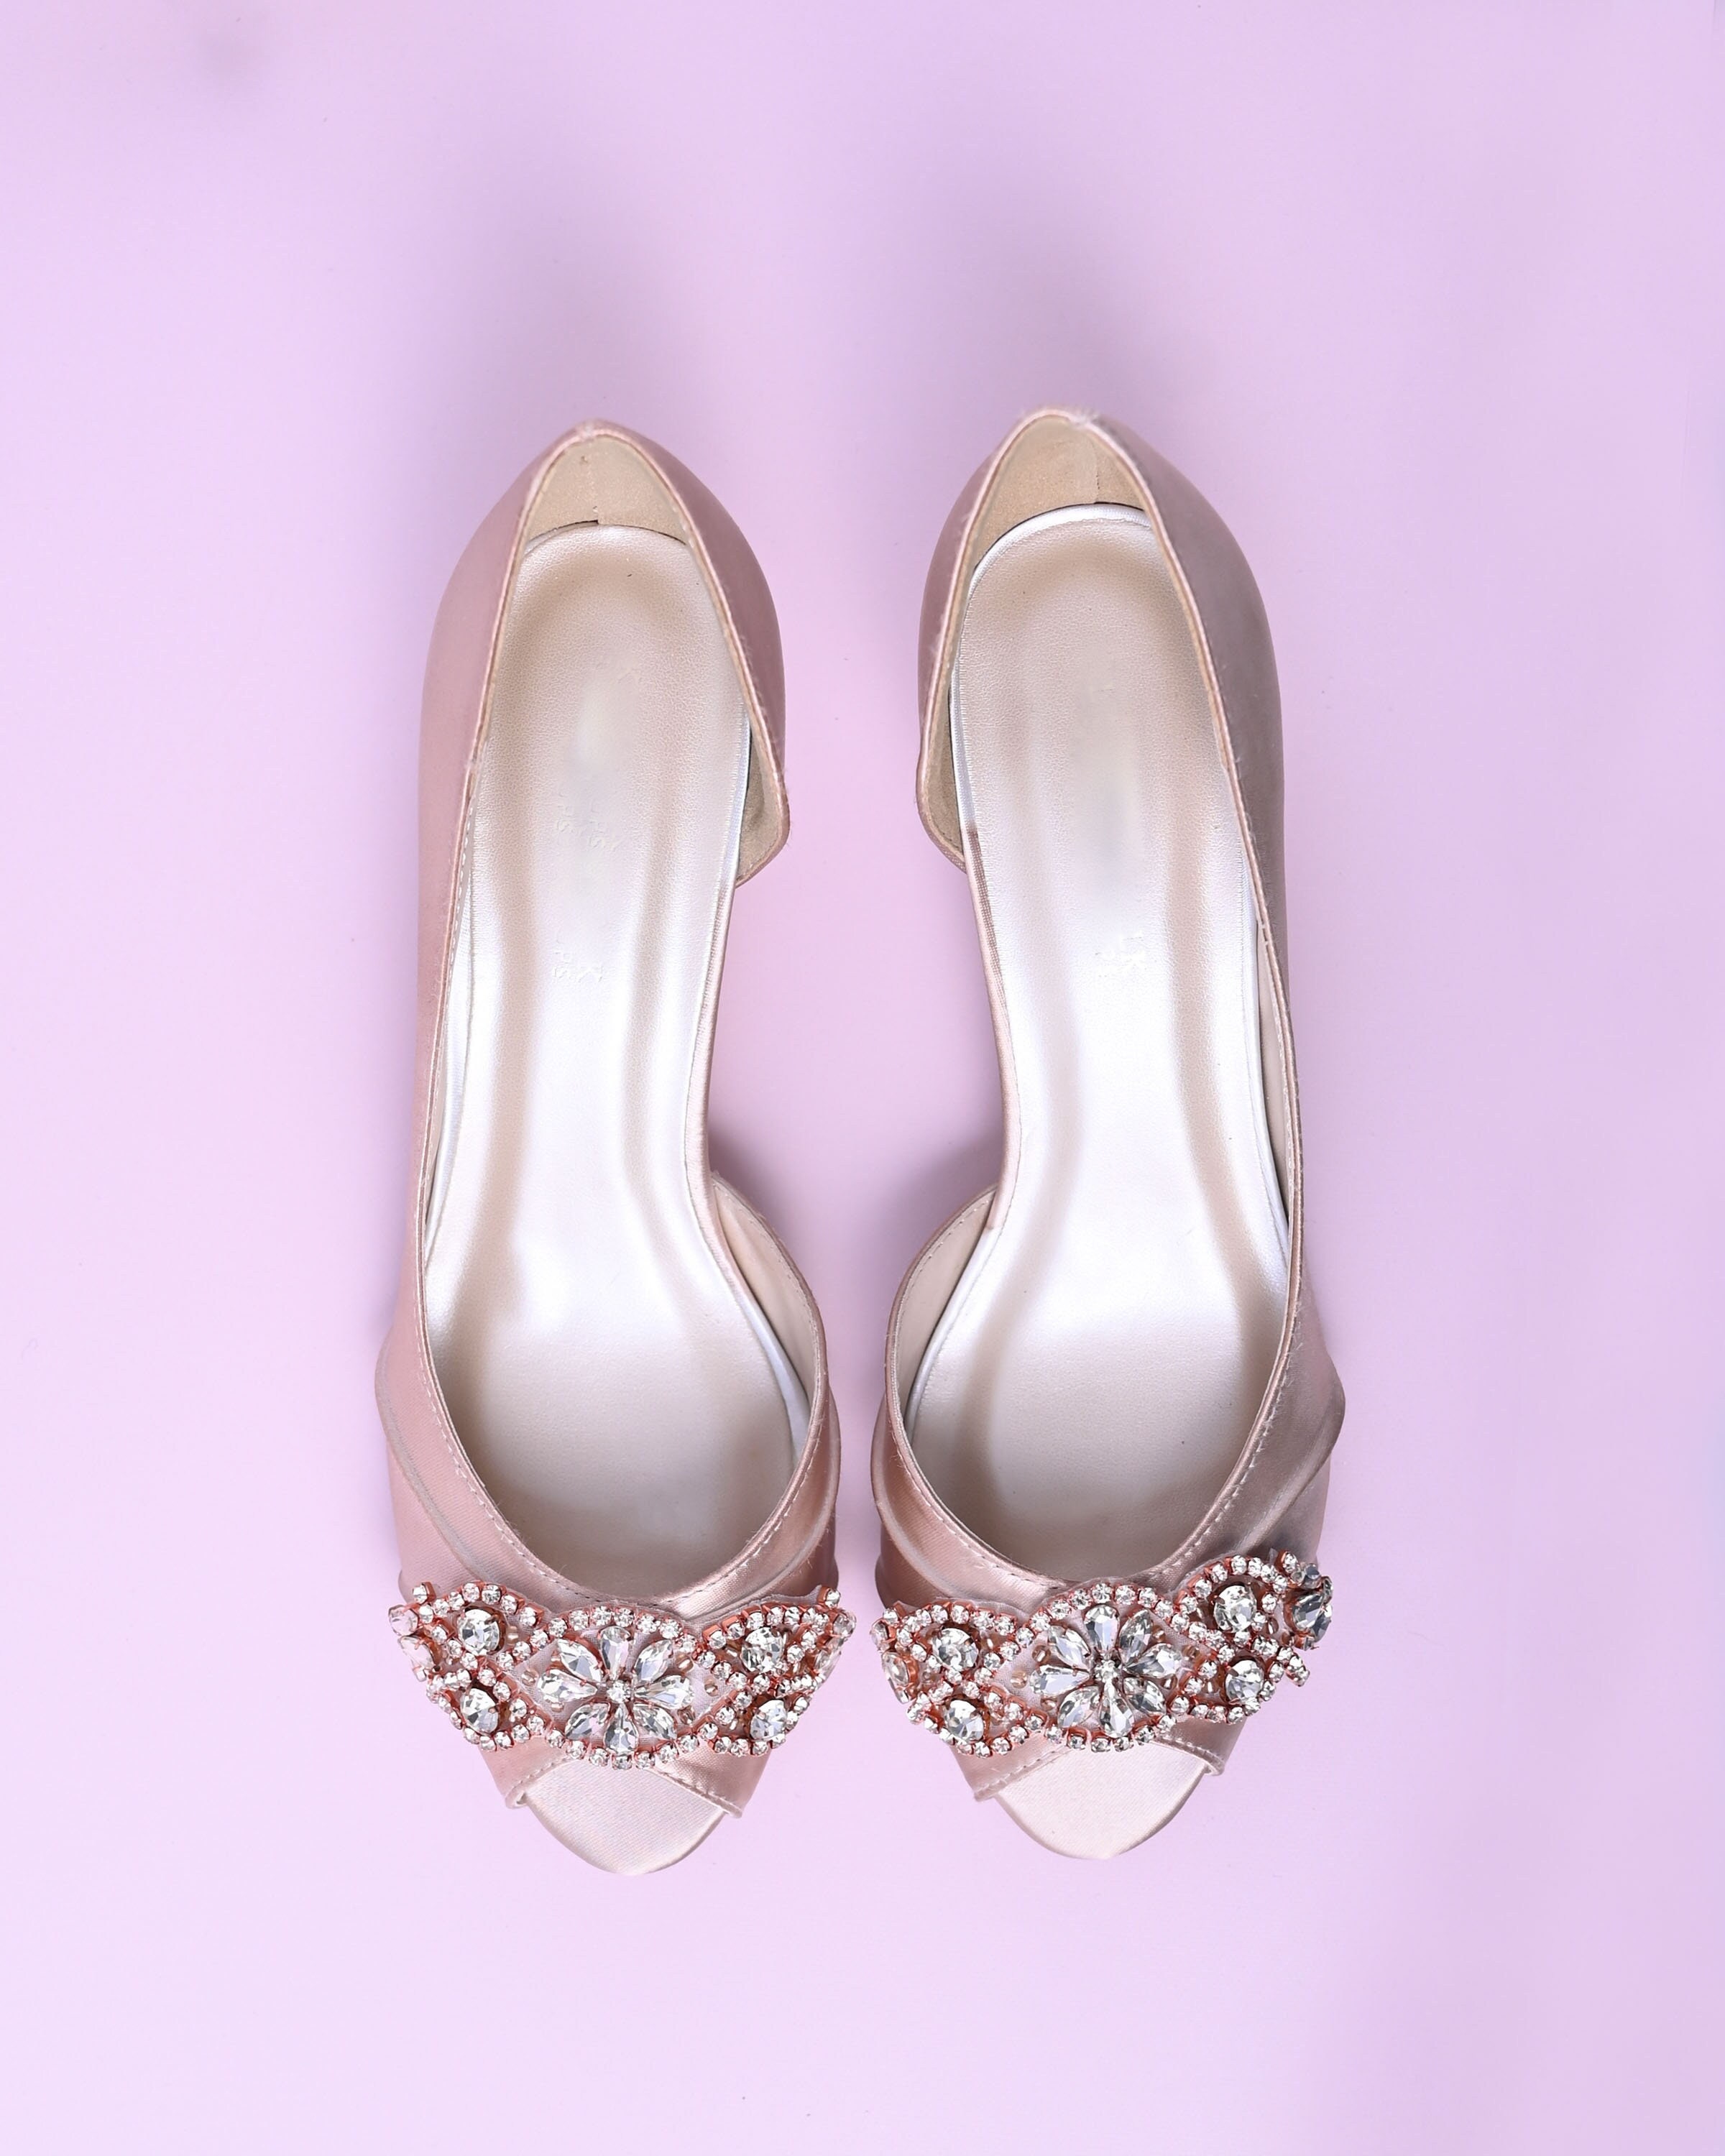 Nine West Blush pink heels | Pink heels, Heels, Blush pink